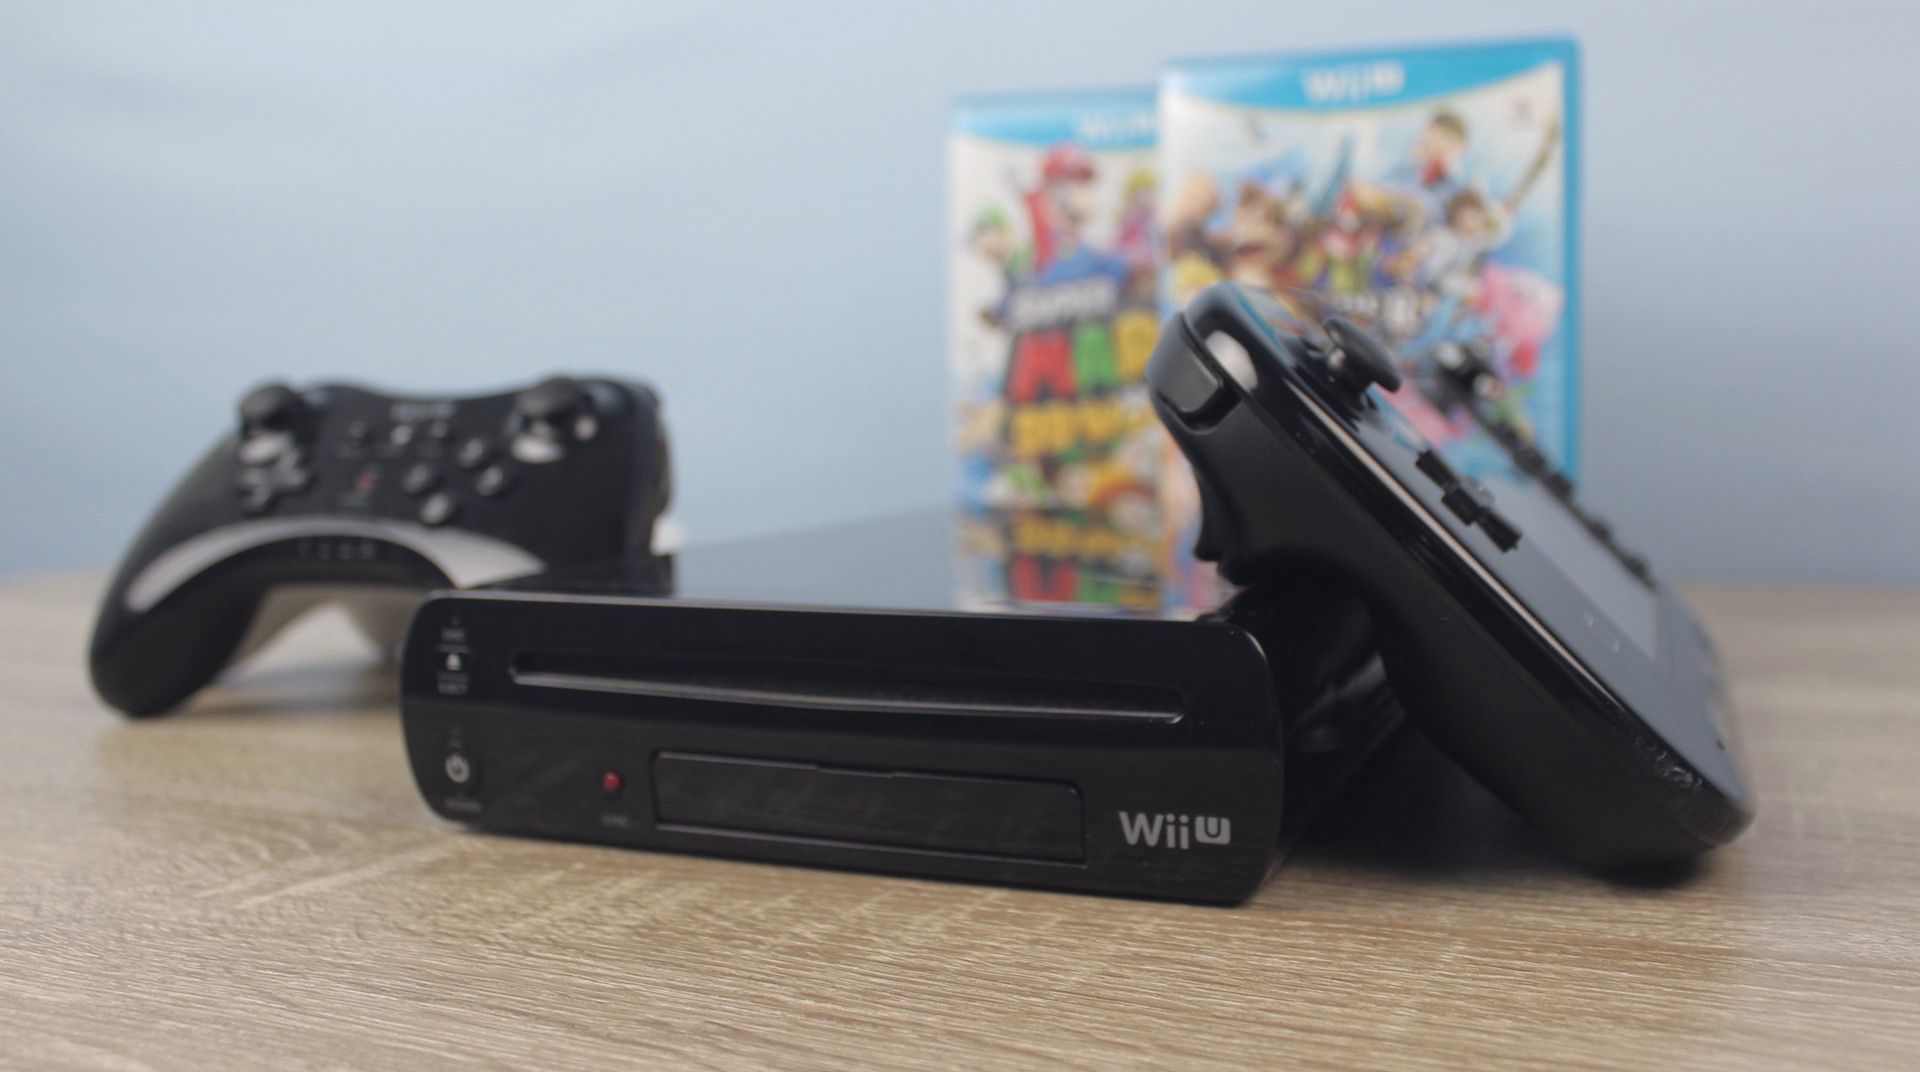 Nintendo Wii U Black with Gamepad, Super Smash Bros, Super Mario 3D World, 2 Pro Controllers, and More!